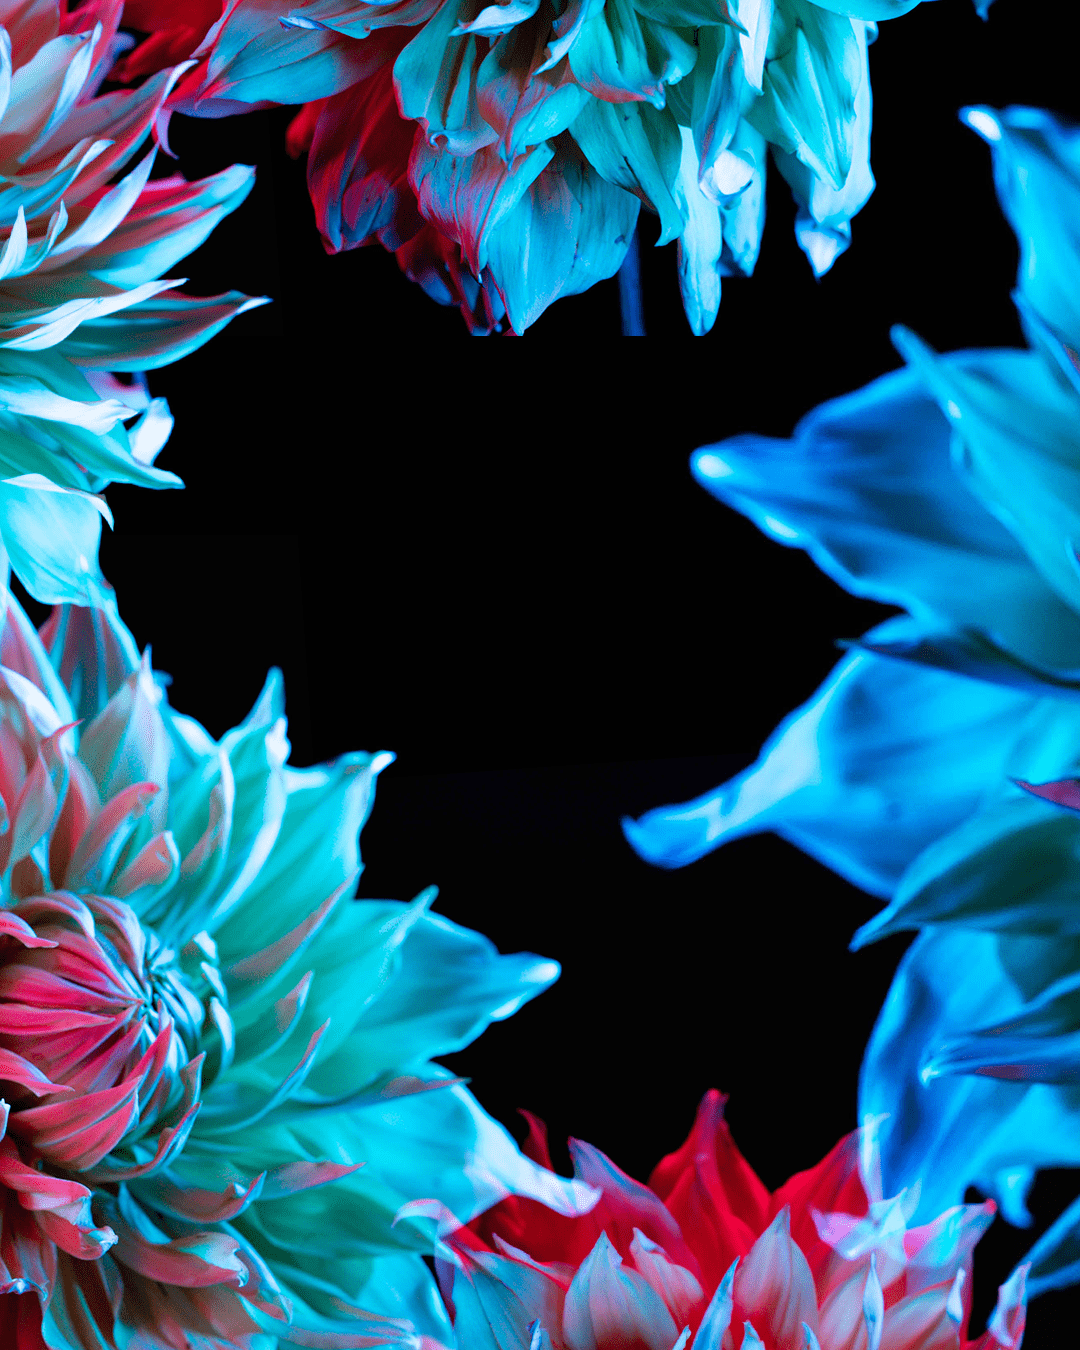 Flowers bloom color lighting dahlia studio still life beauty Nature Photography 